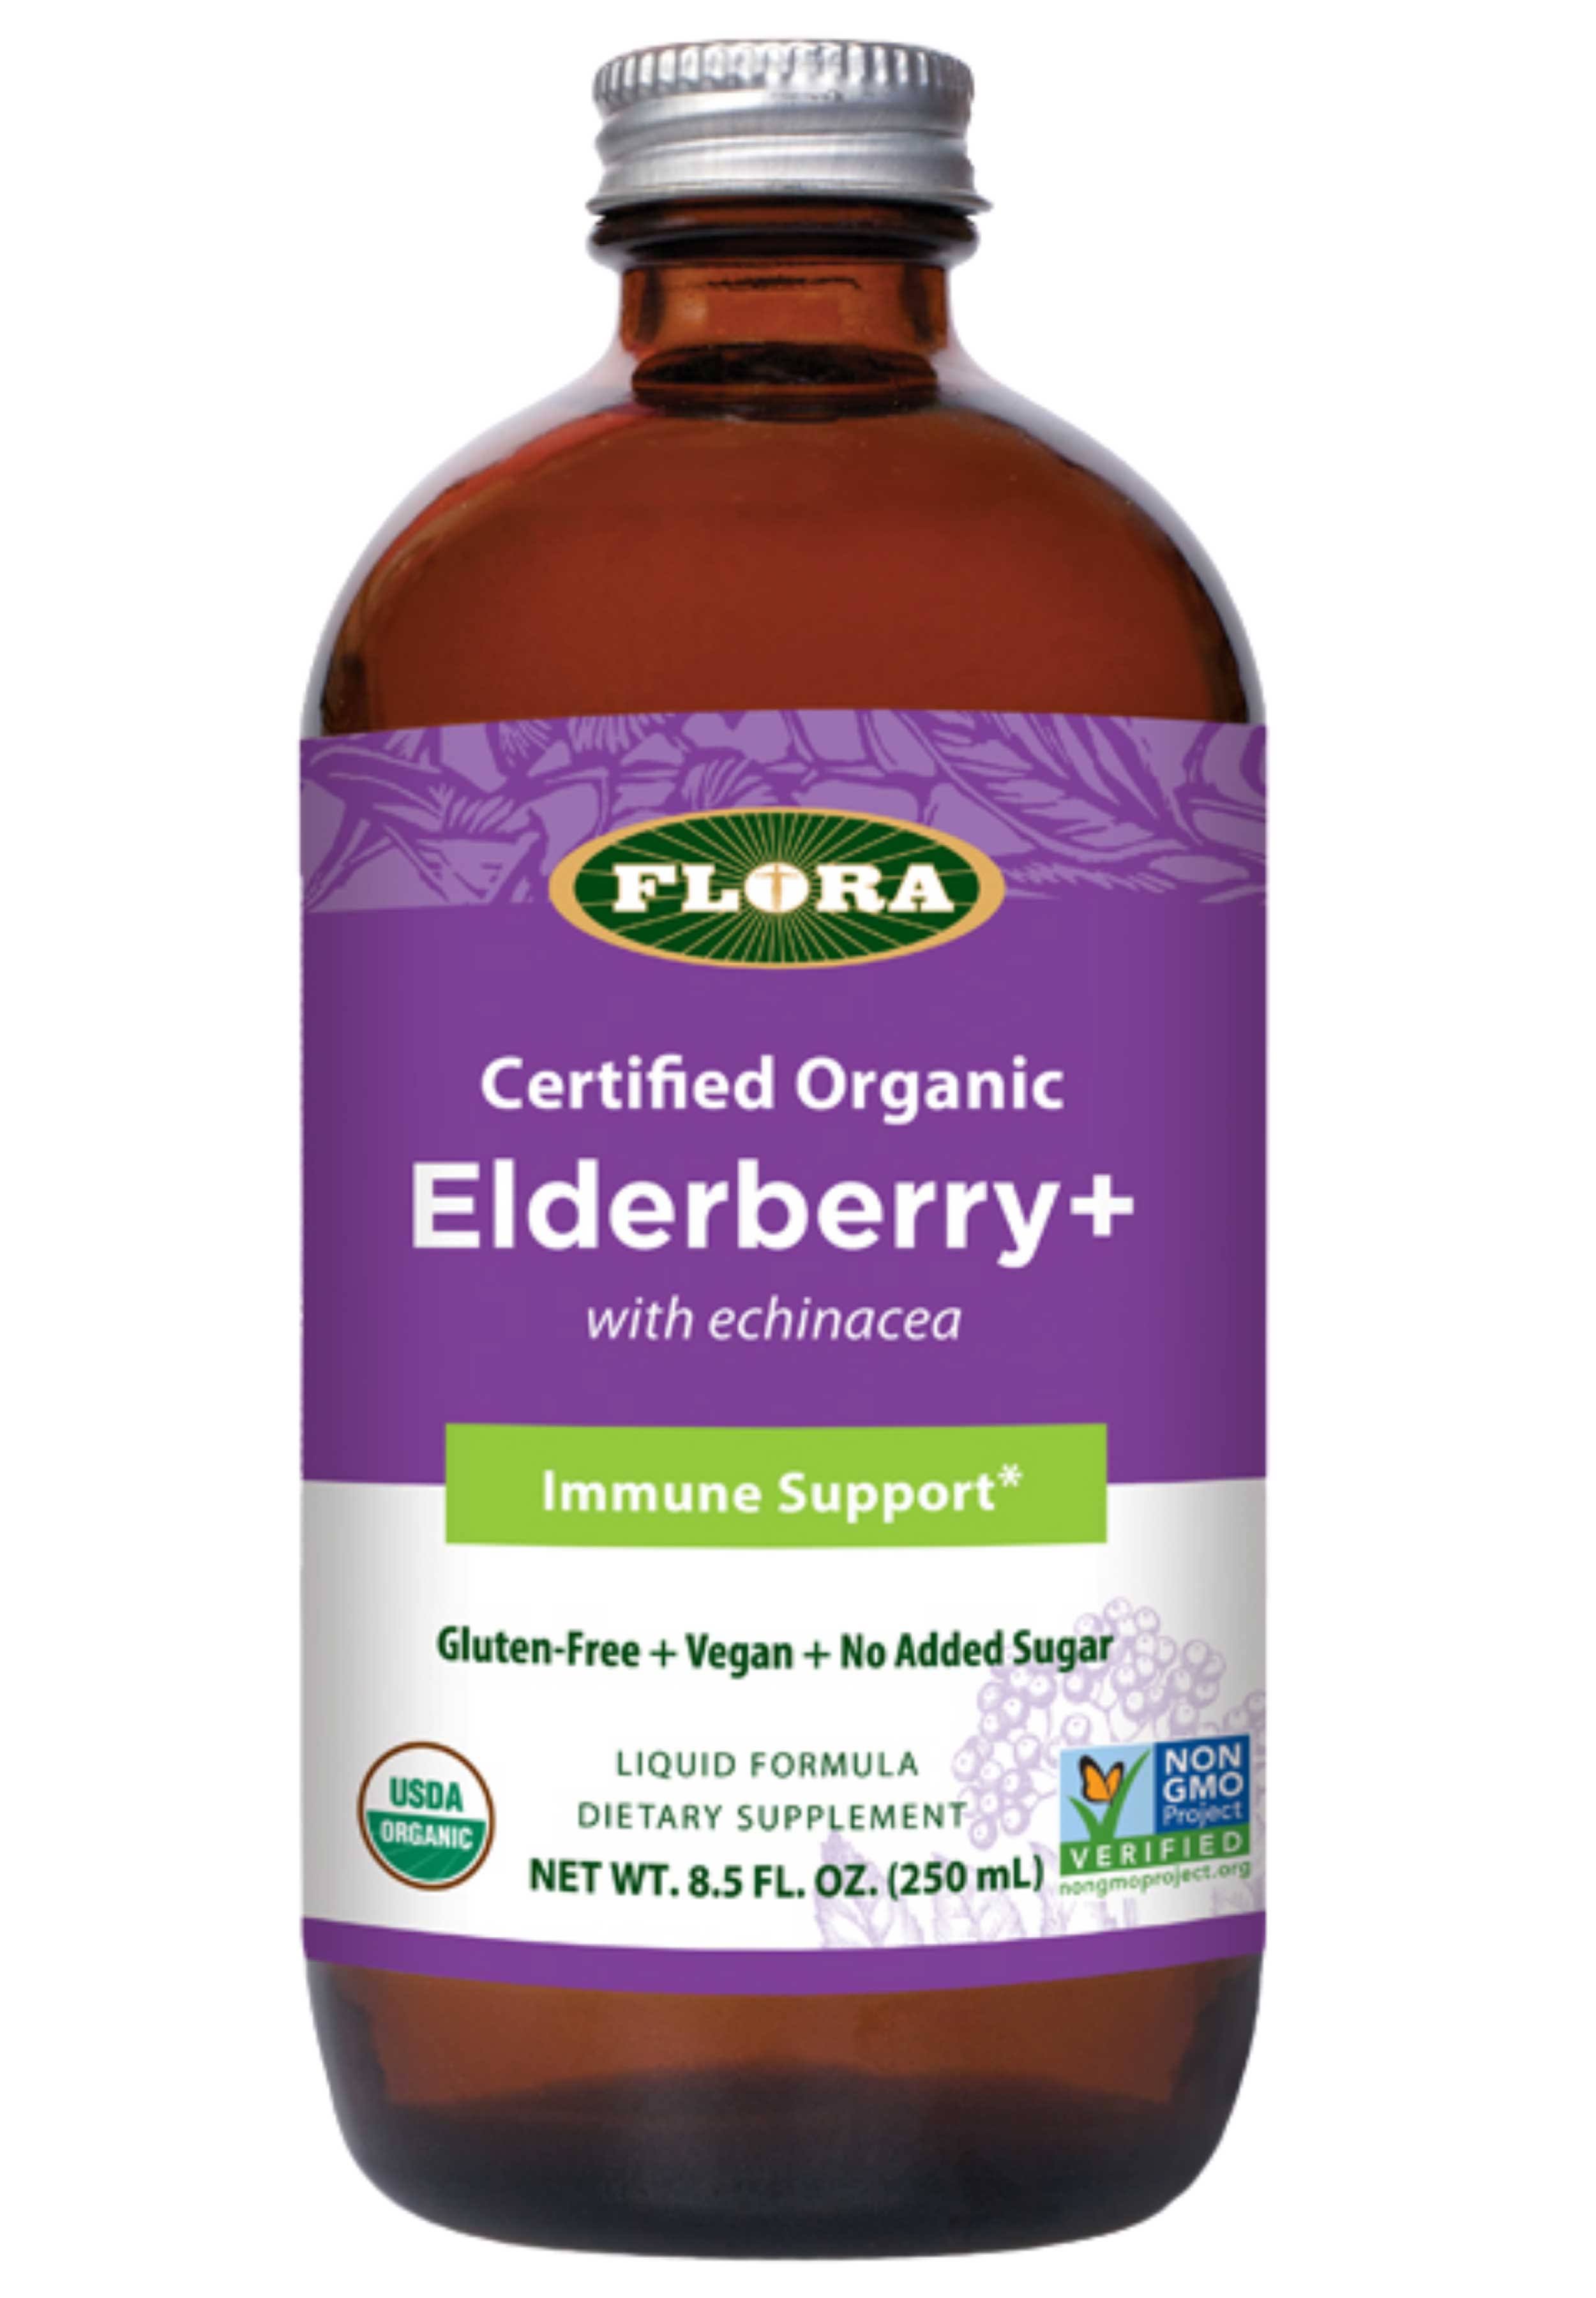 Flora, Certified Organic Elderberry+ with Echinacea, Immune Support, 8.5 fl oz (250 ml)